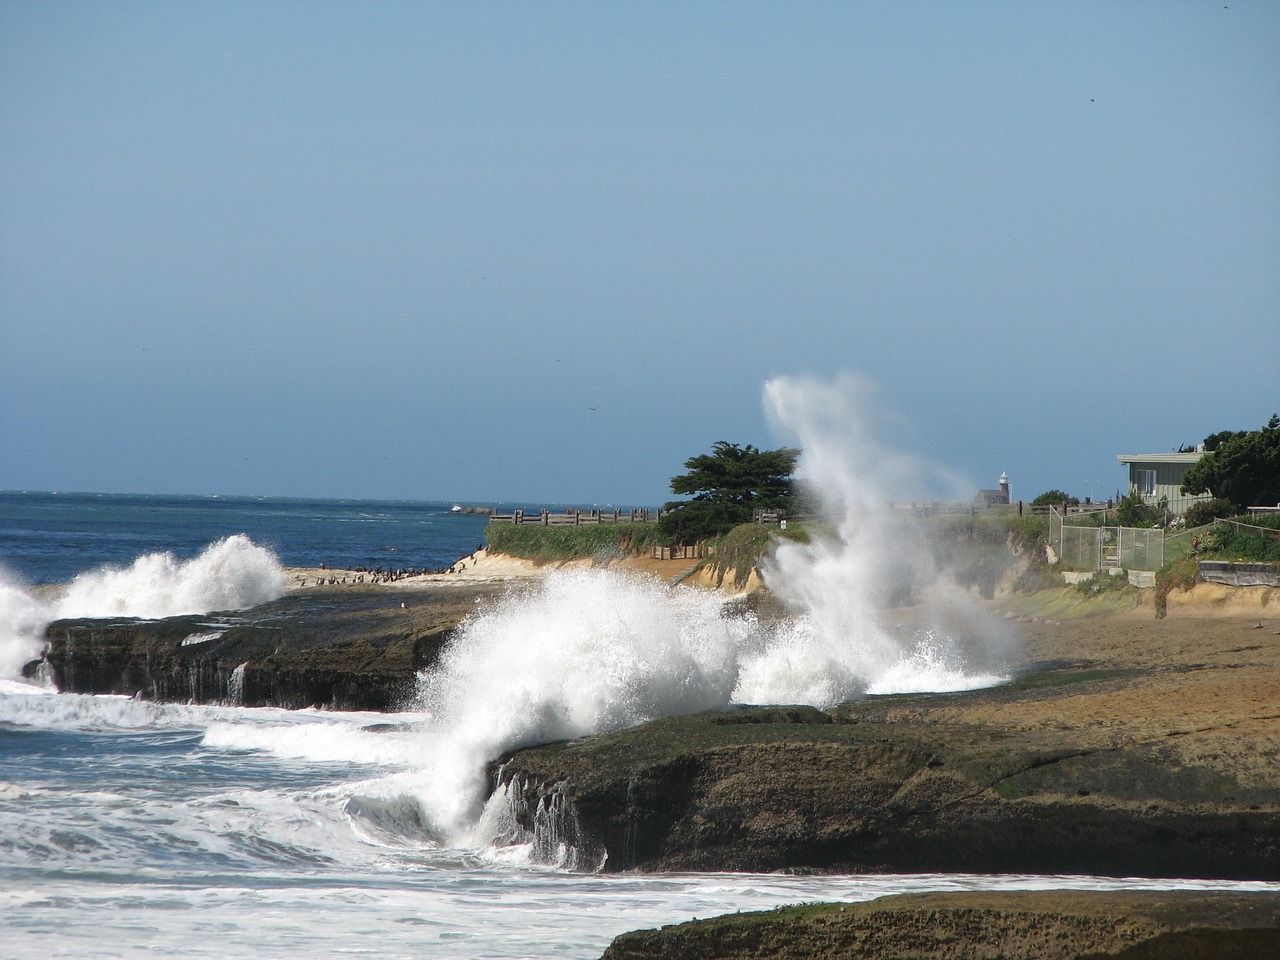 Support Sea Level Rise Plans for the Entire California Coast